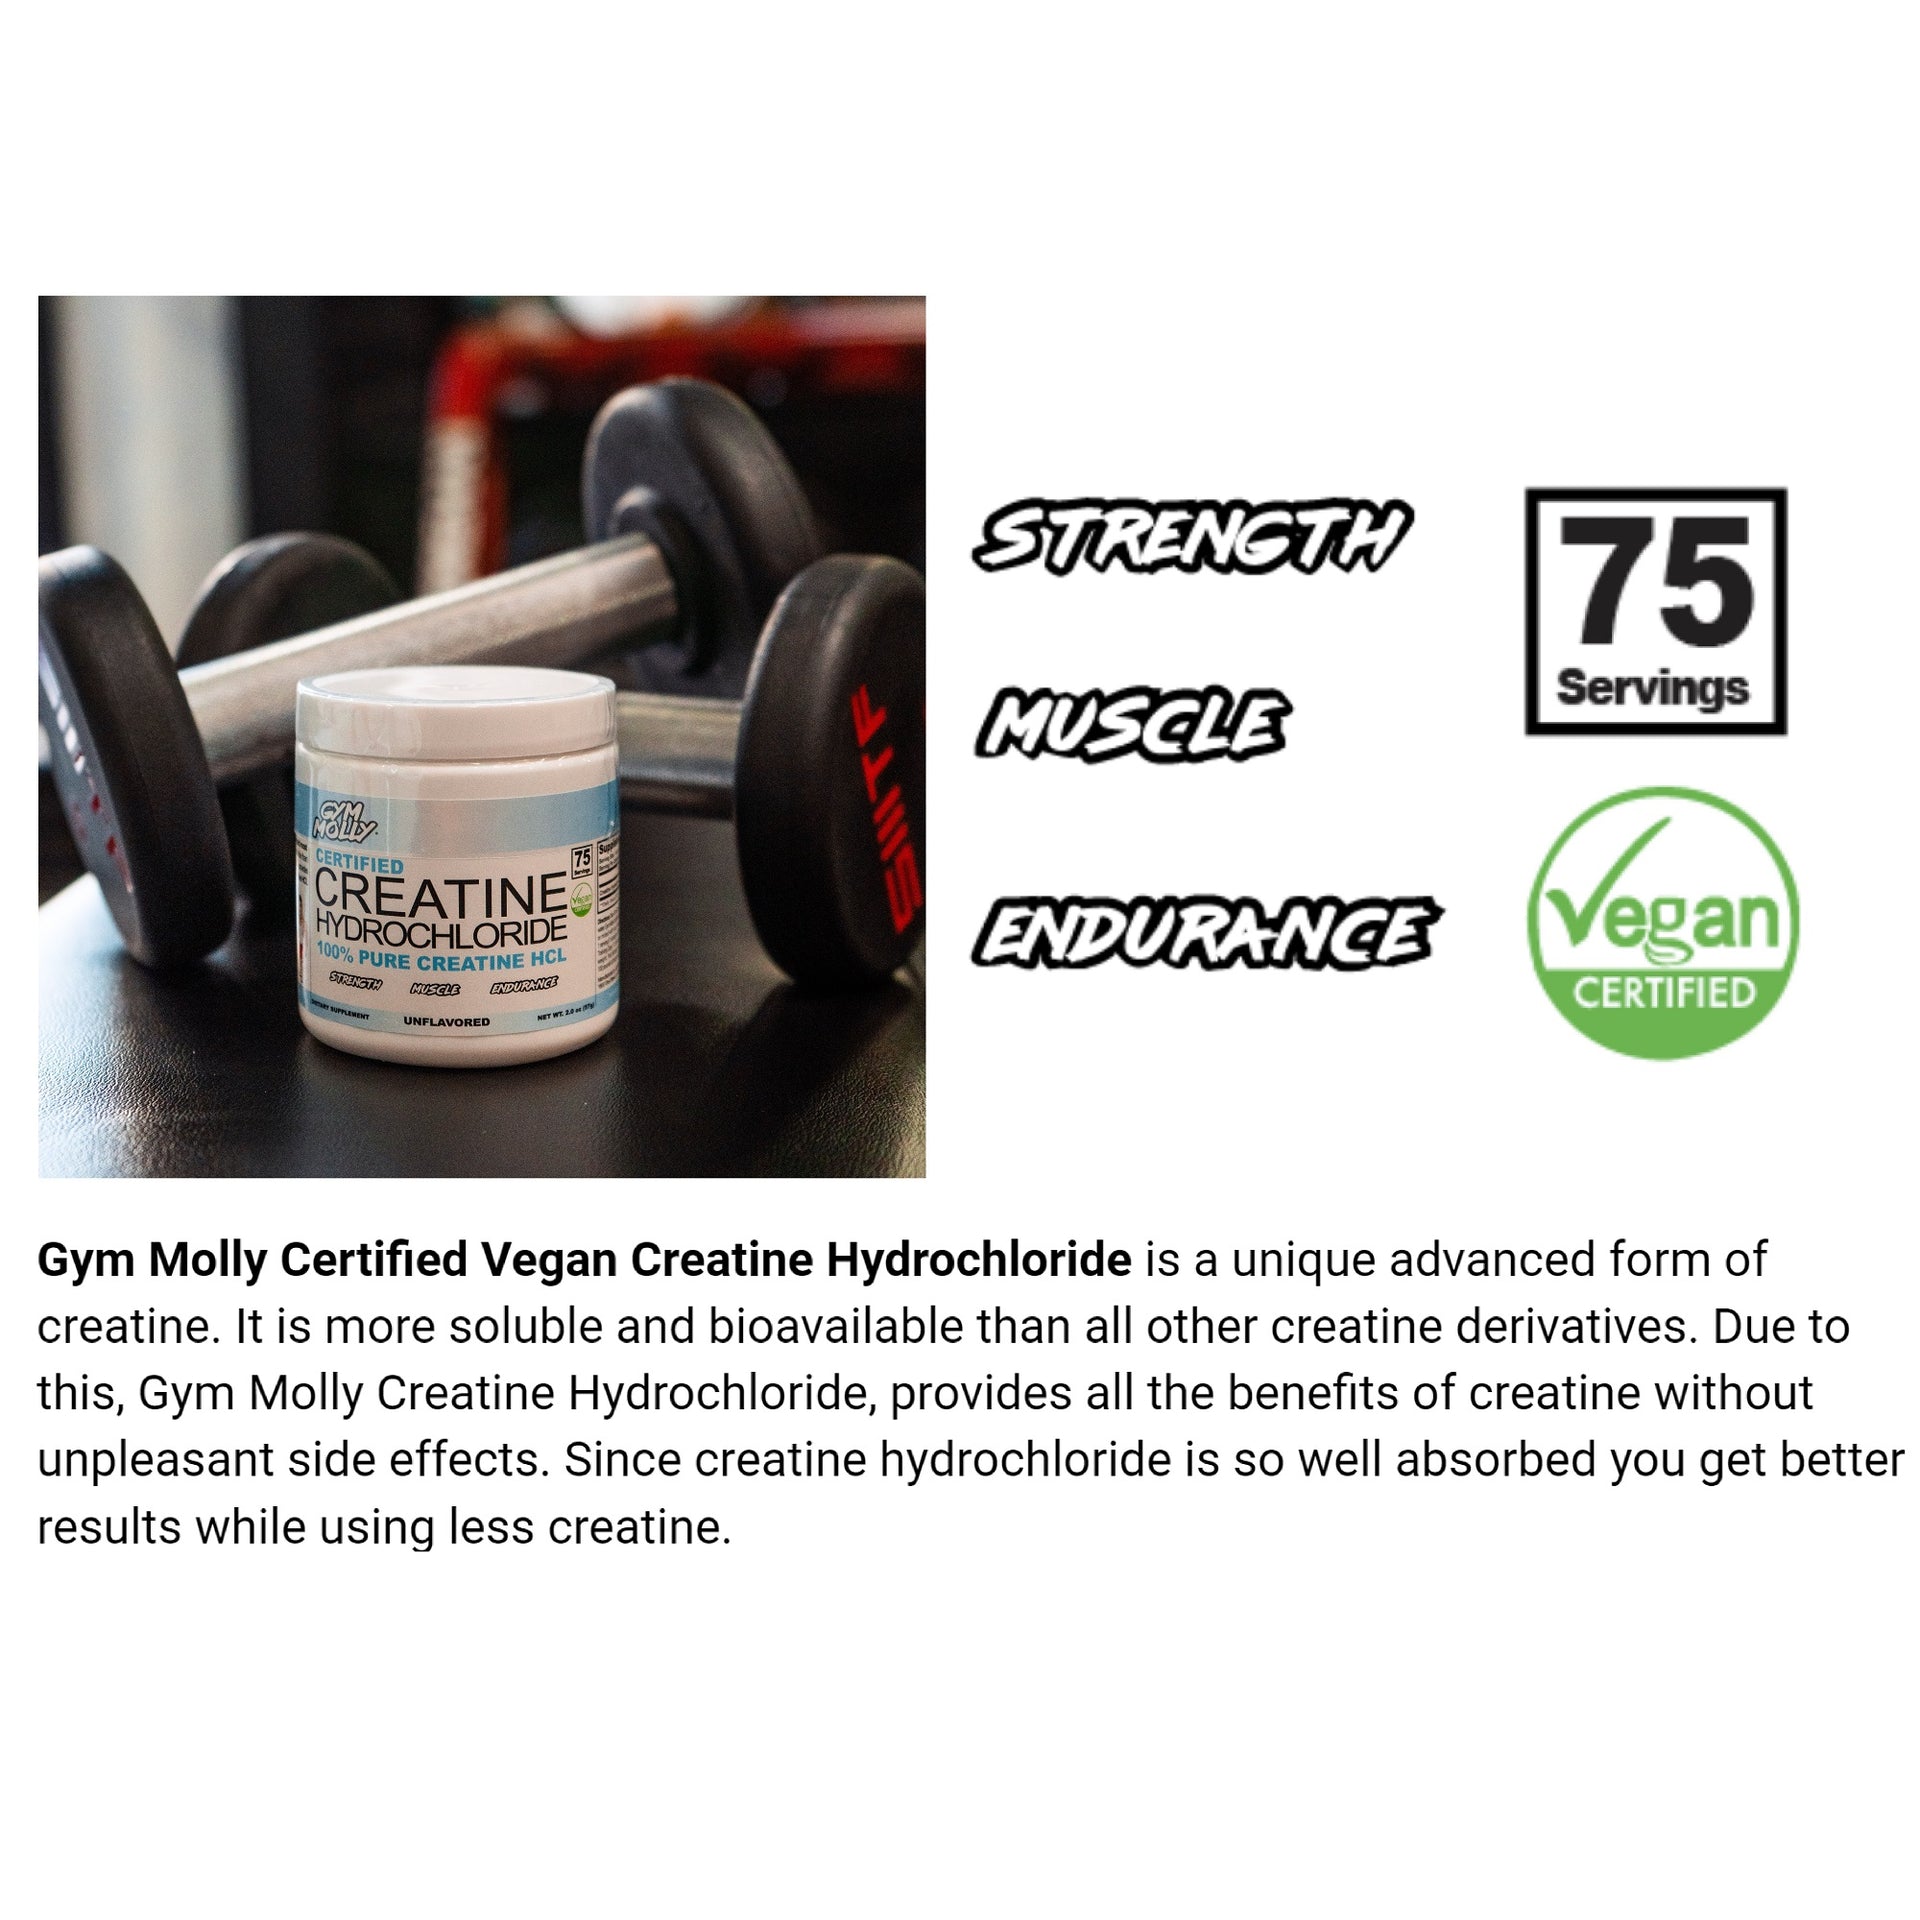 Gym Molly Creatine Hydrochloride is Certified Vegan